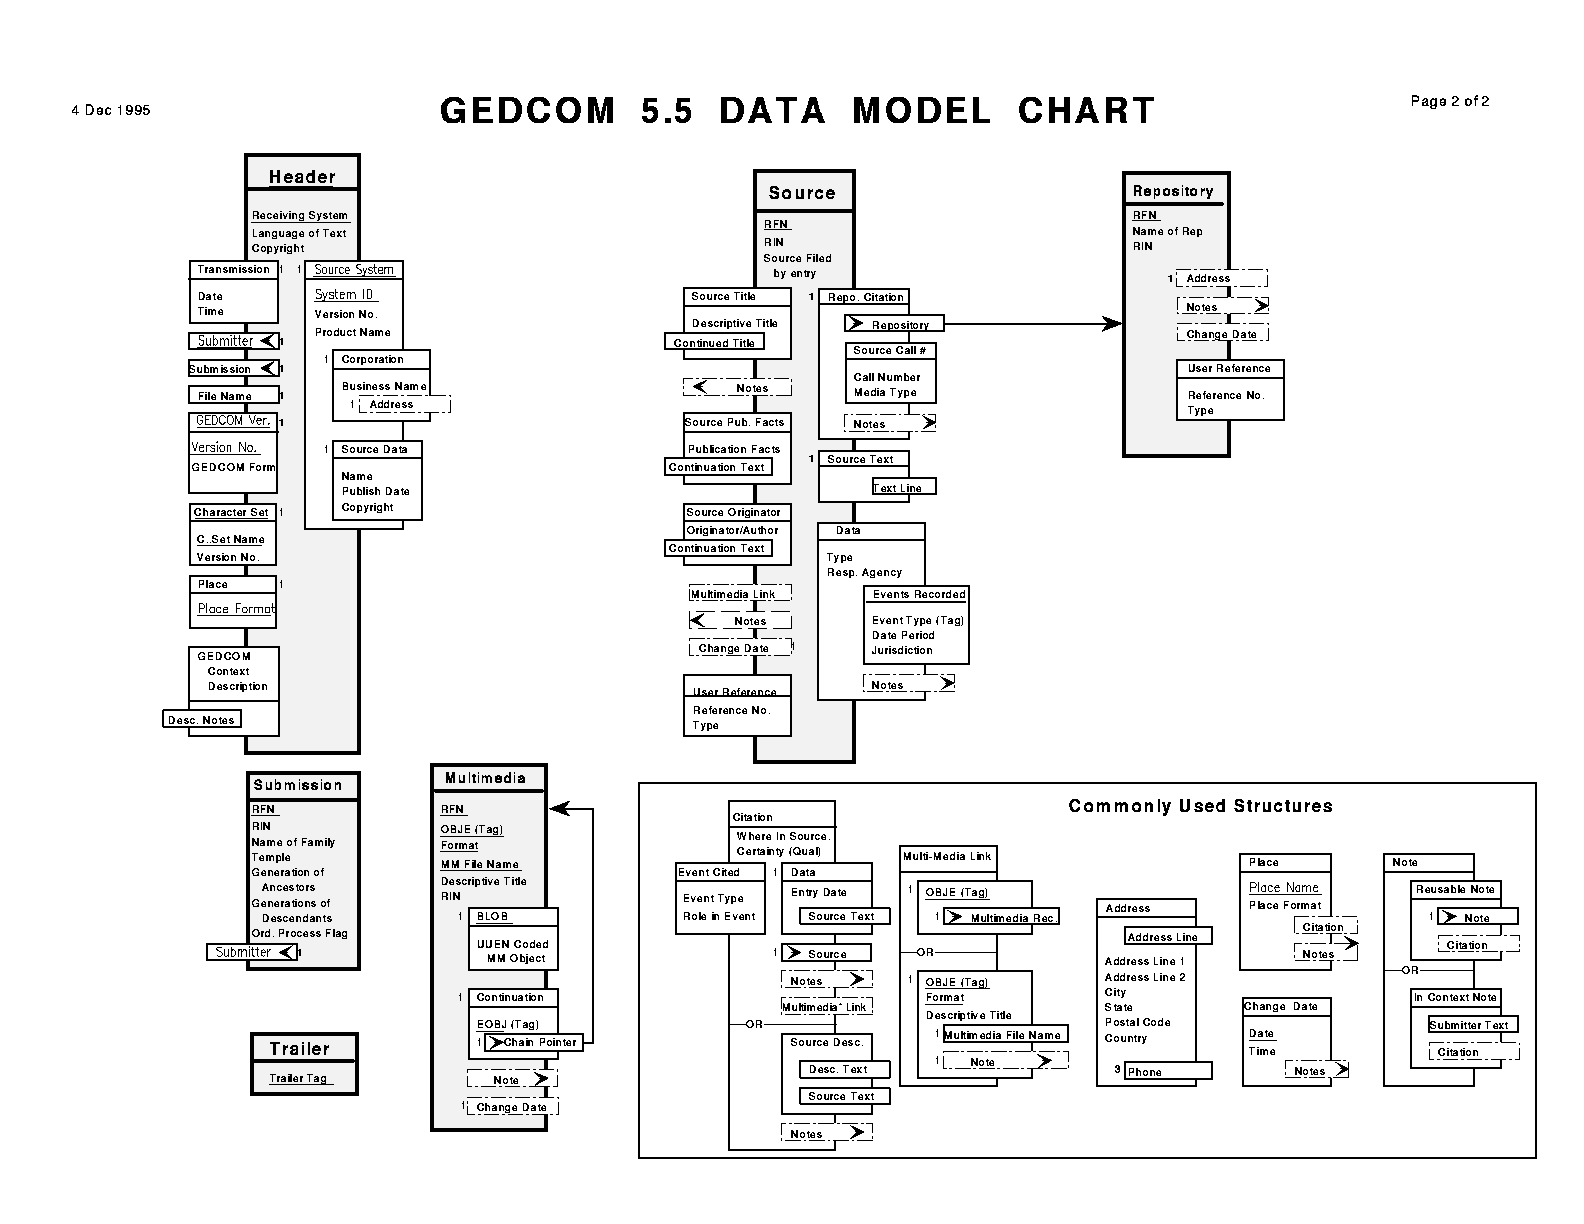 GEDCOM 5.5 Data Model Chart, Page 2